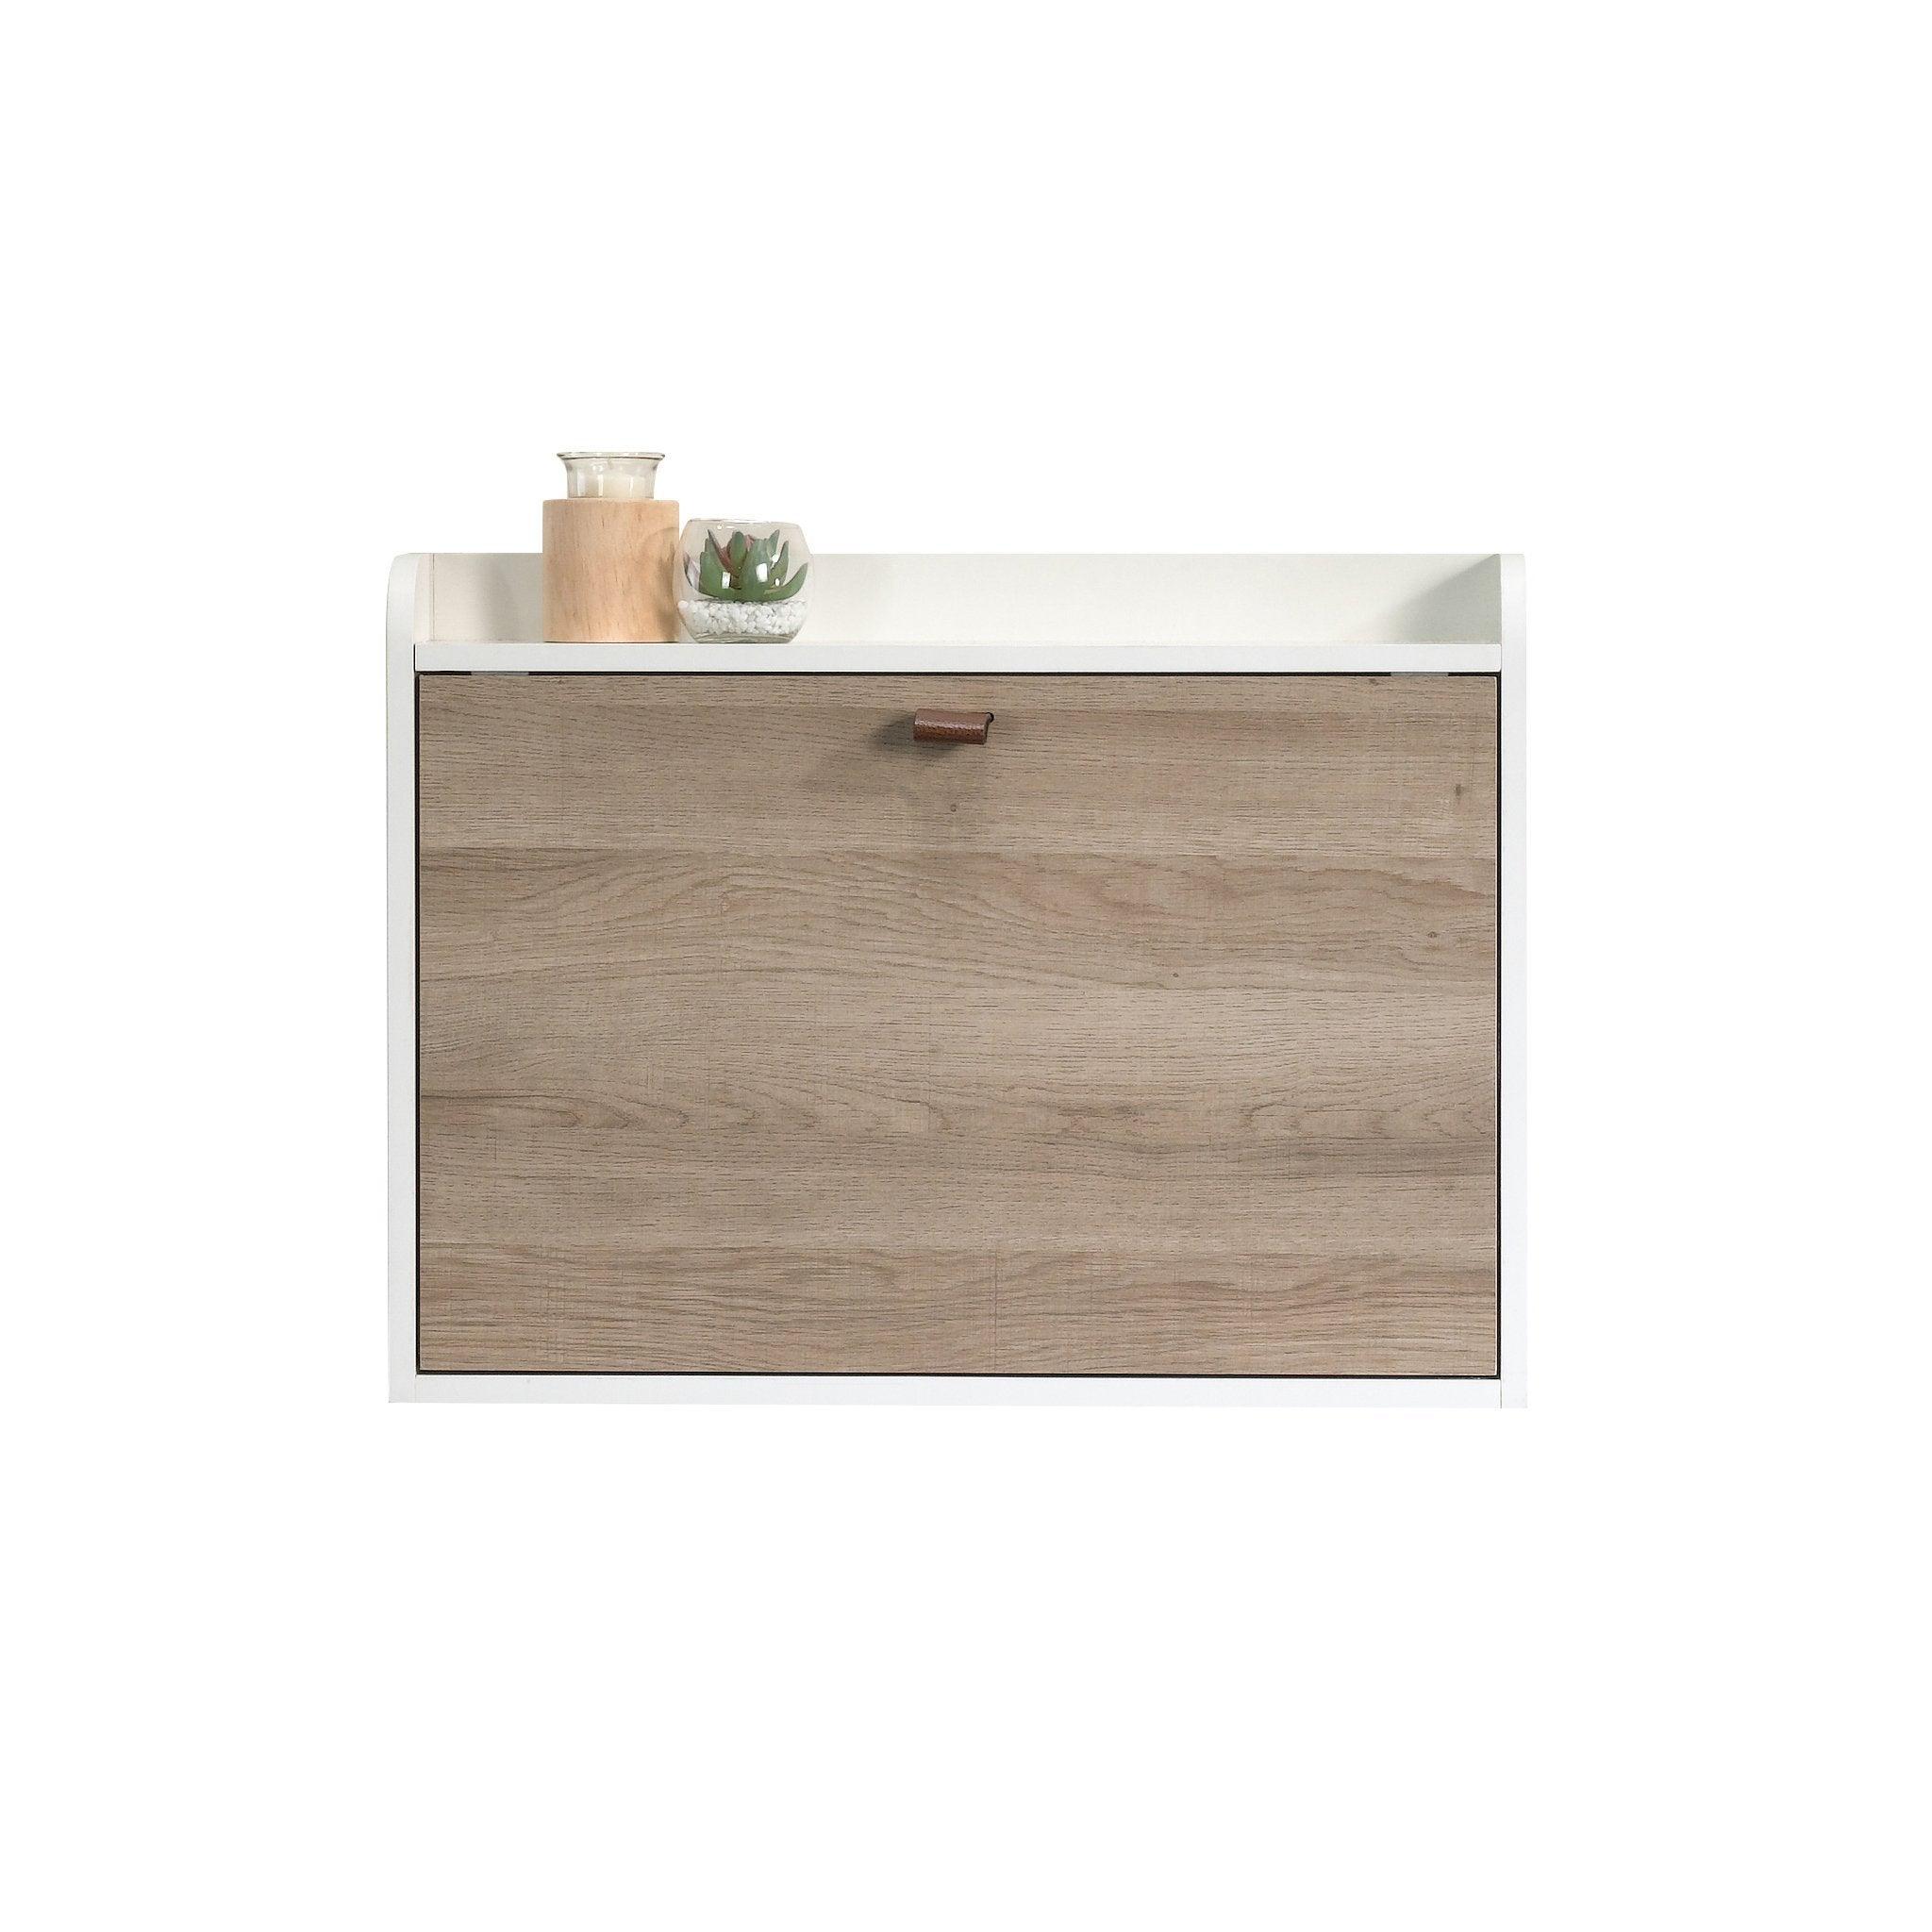 Avon leather handled foldaway wall desk - white - image 12